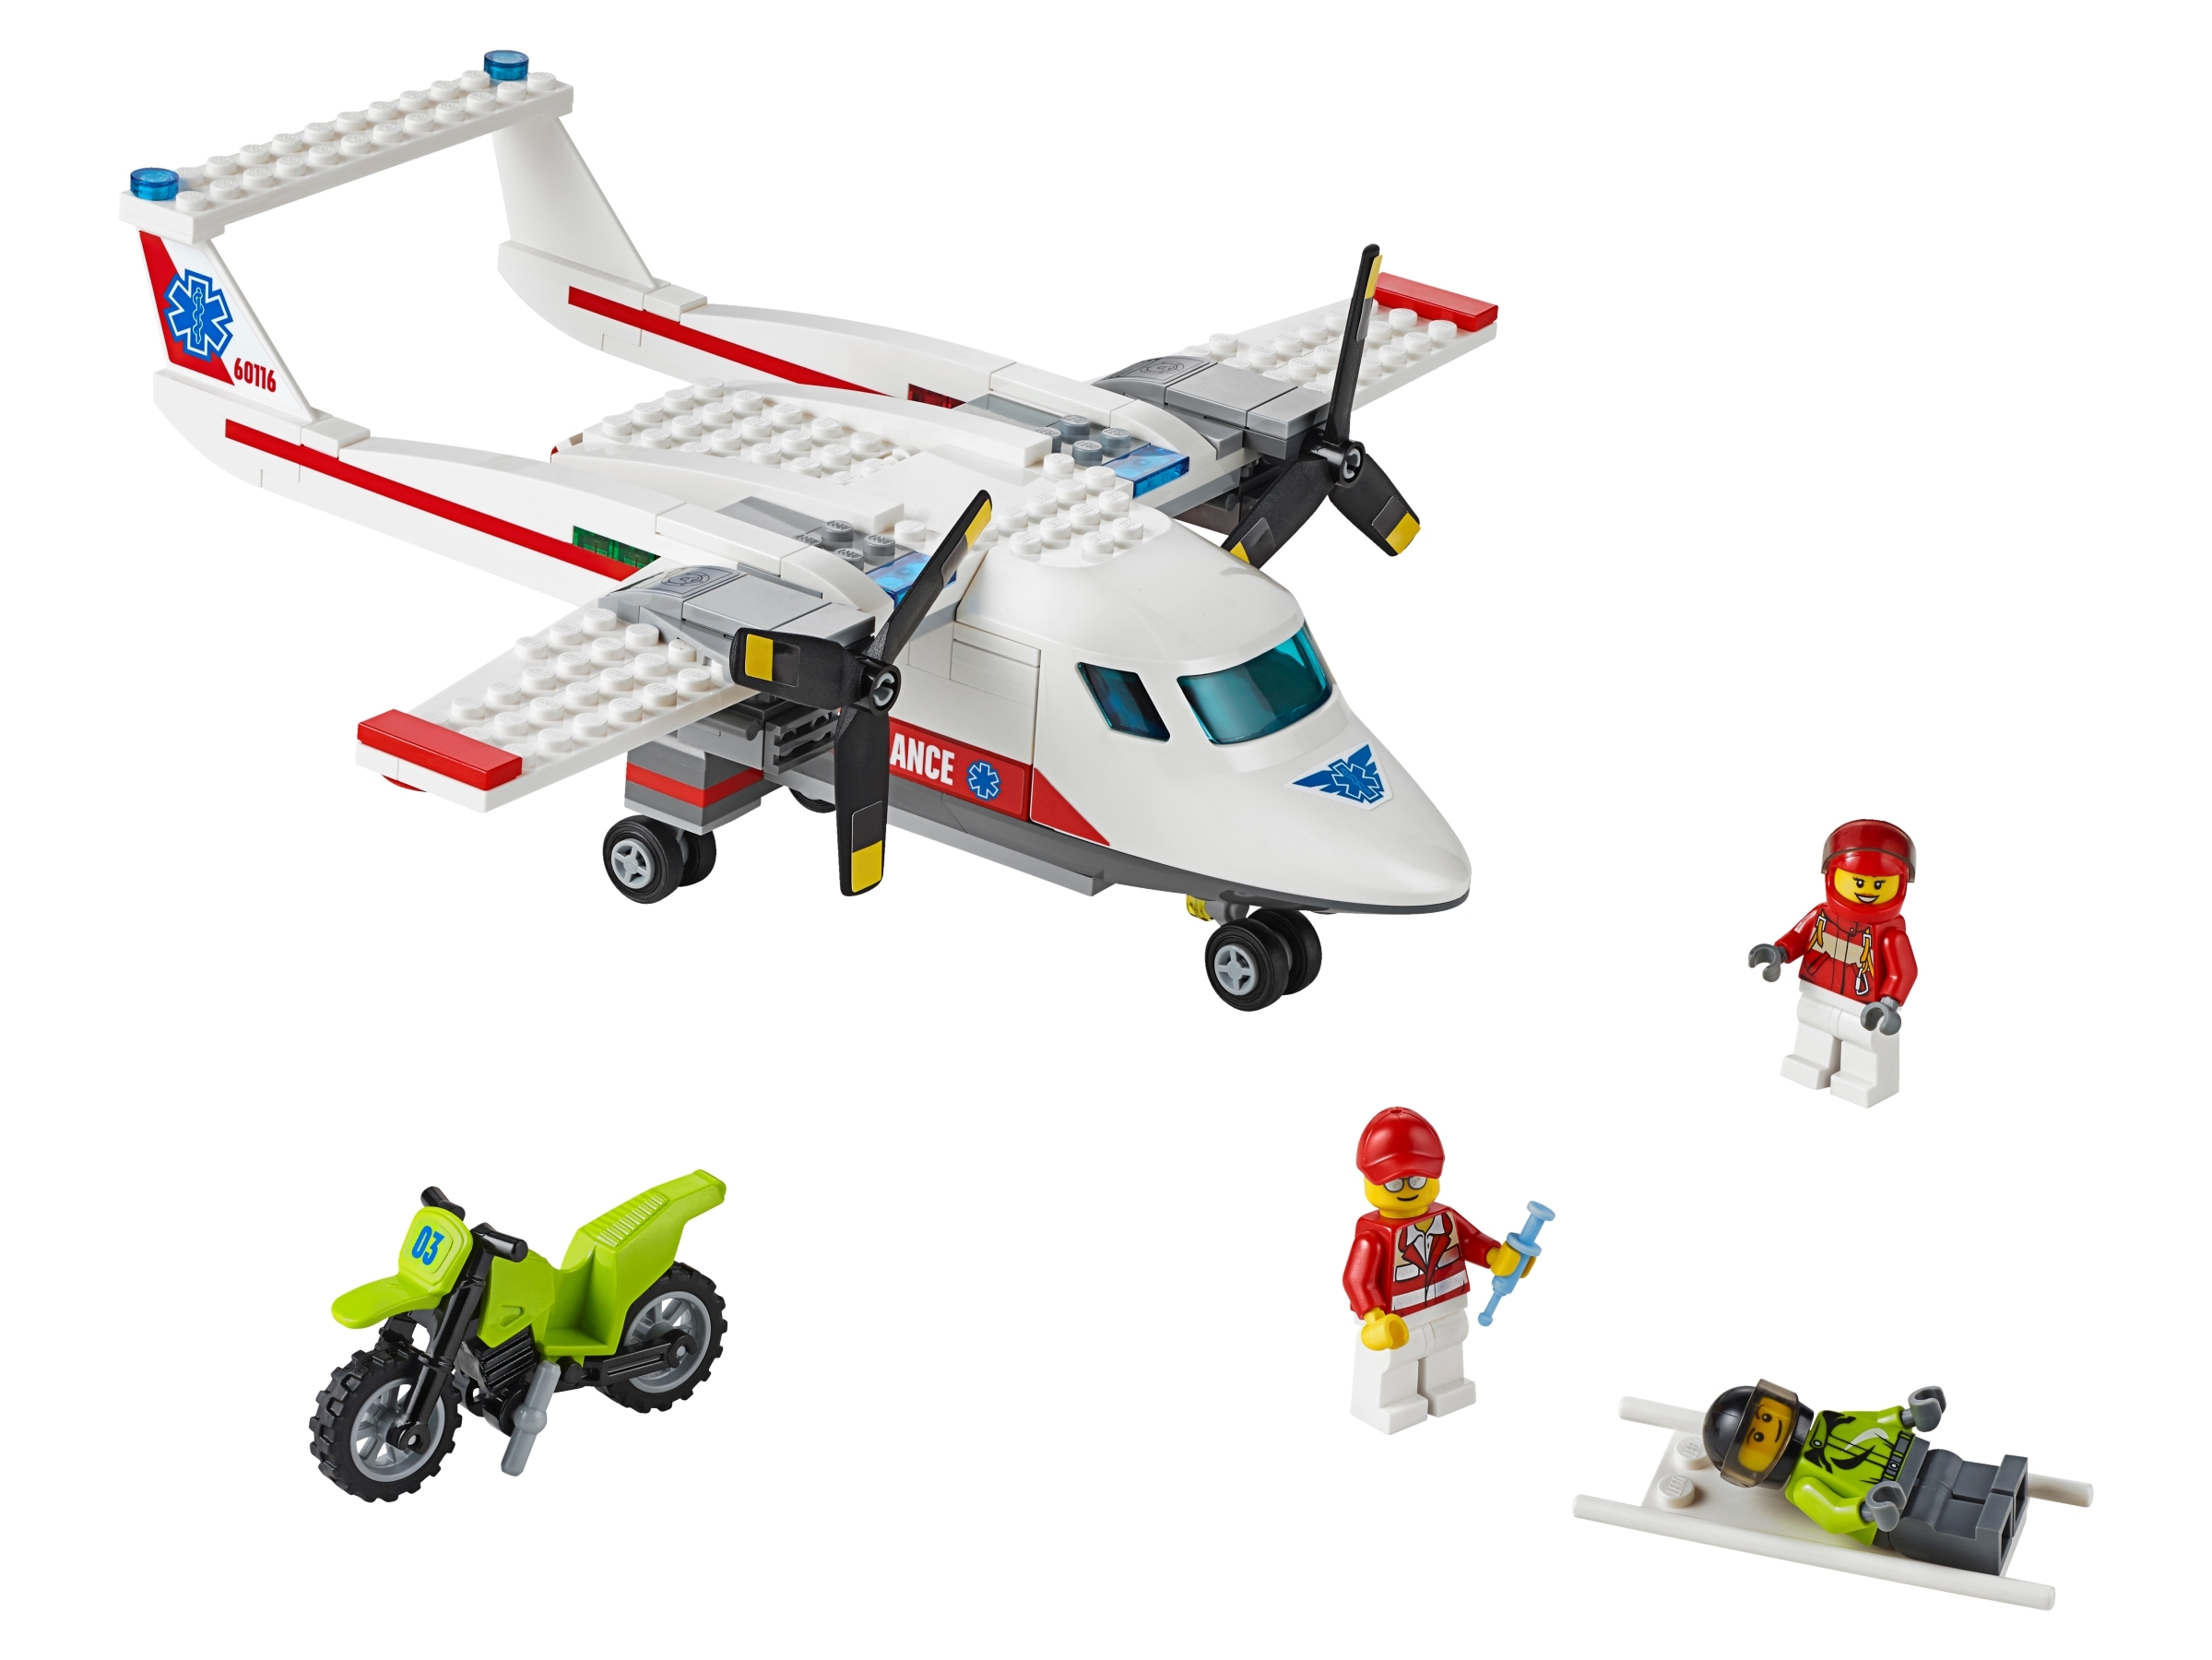 LEGO City Ambulance Plane for sale online 60116 